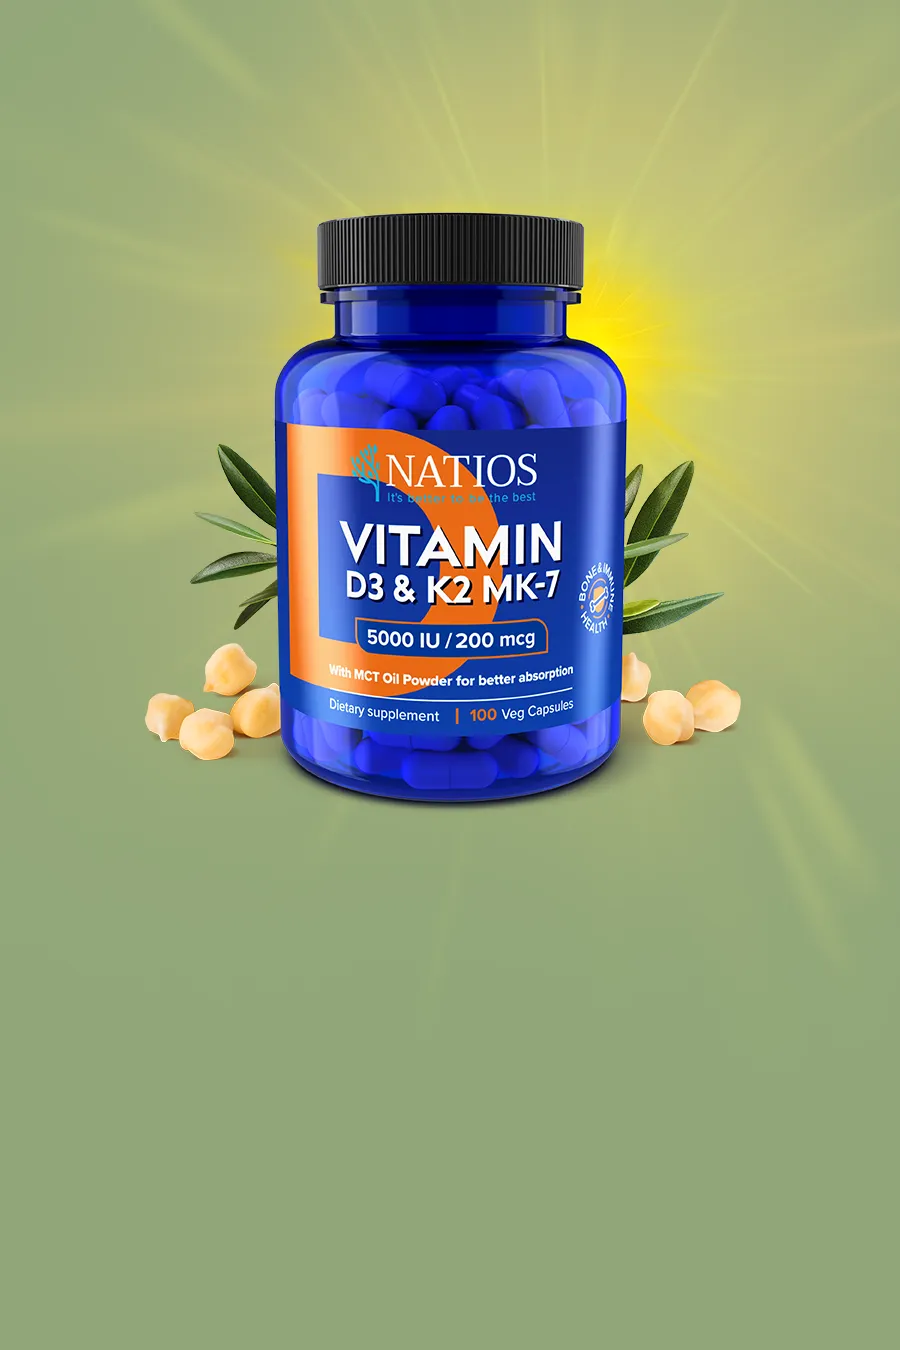 Natios Vitamin D3 K2